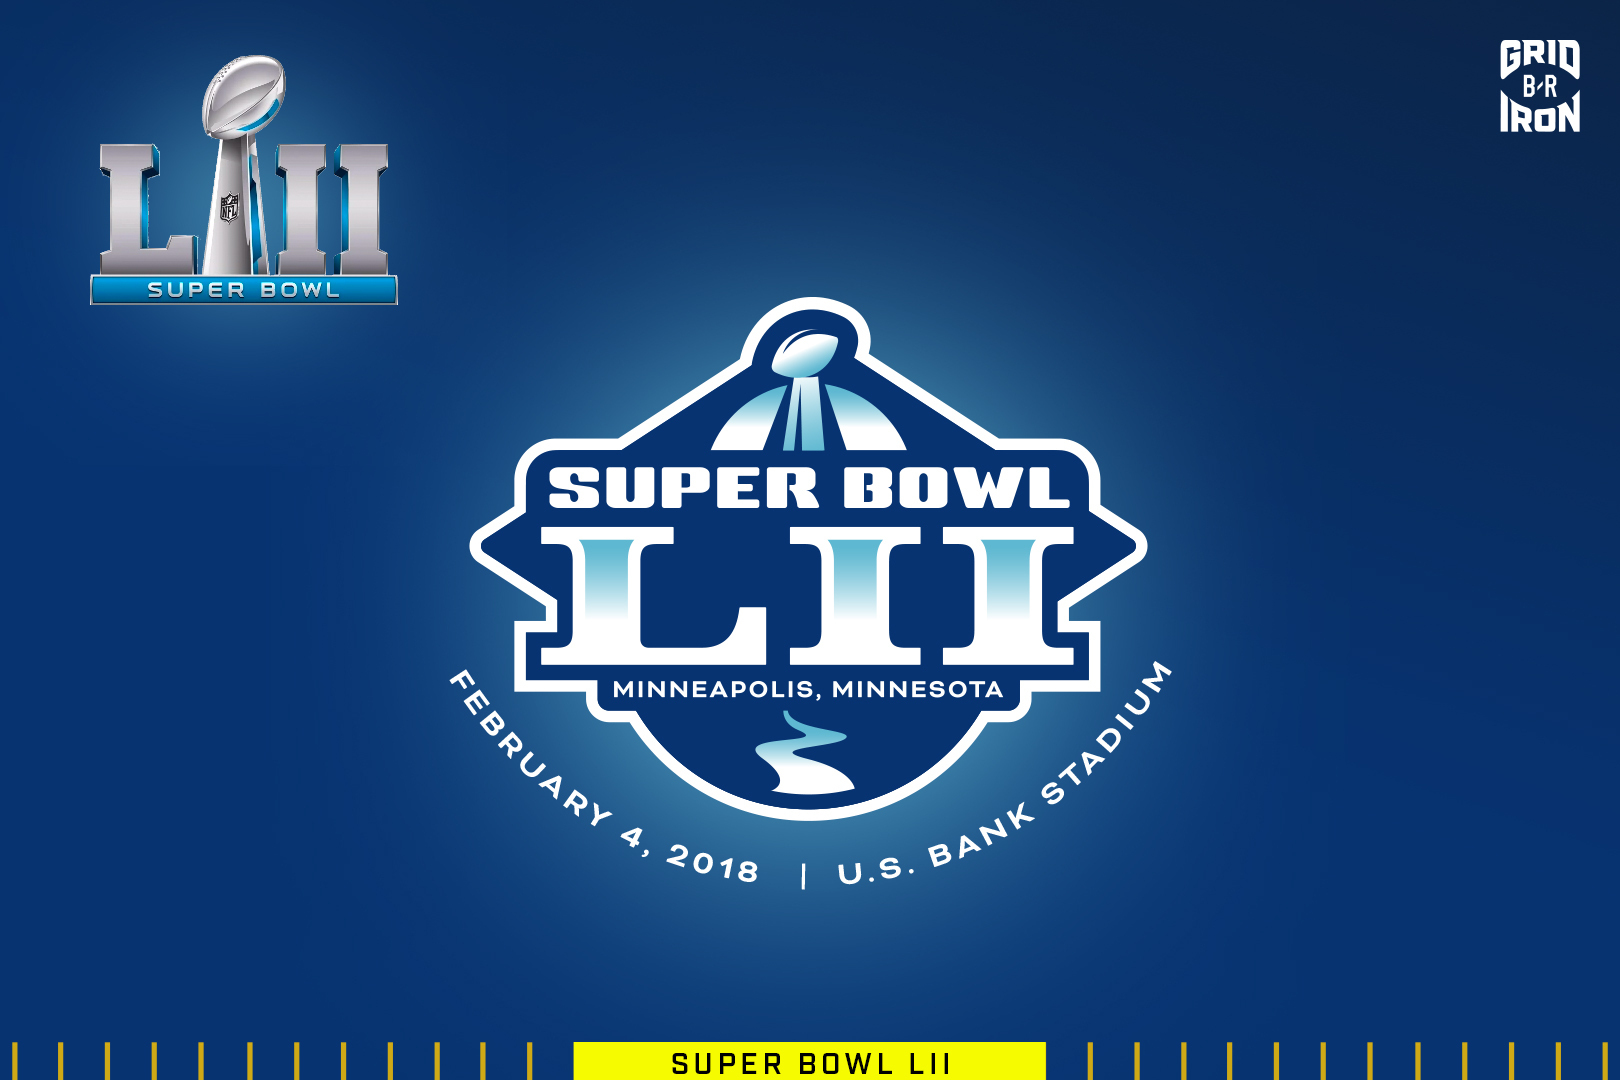 Super Bowl LVI Logo Concept - Concepts - Chris Creamer's Sports